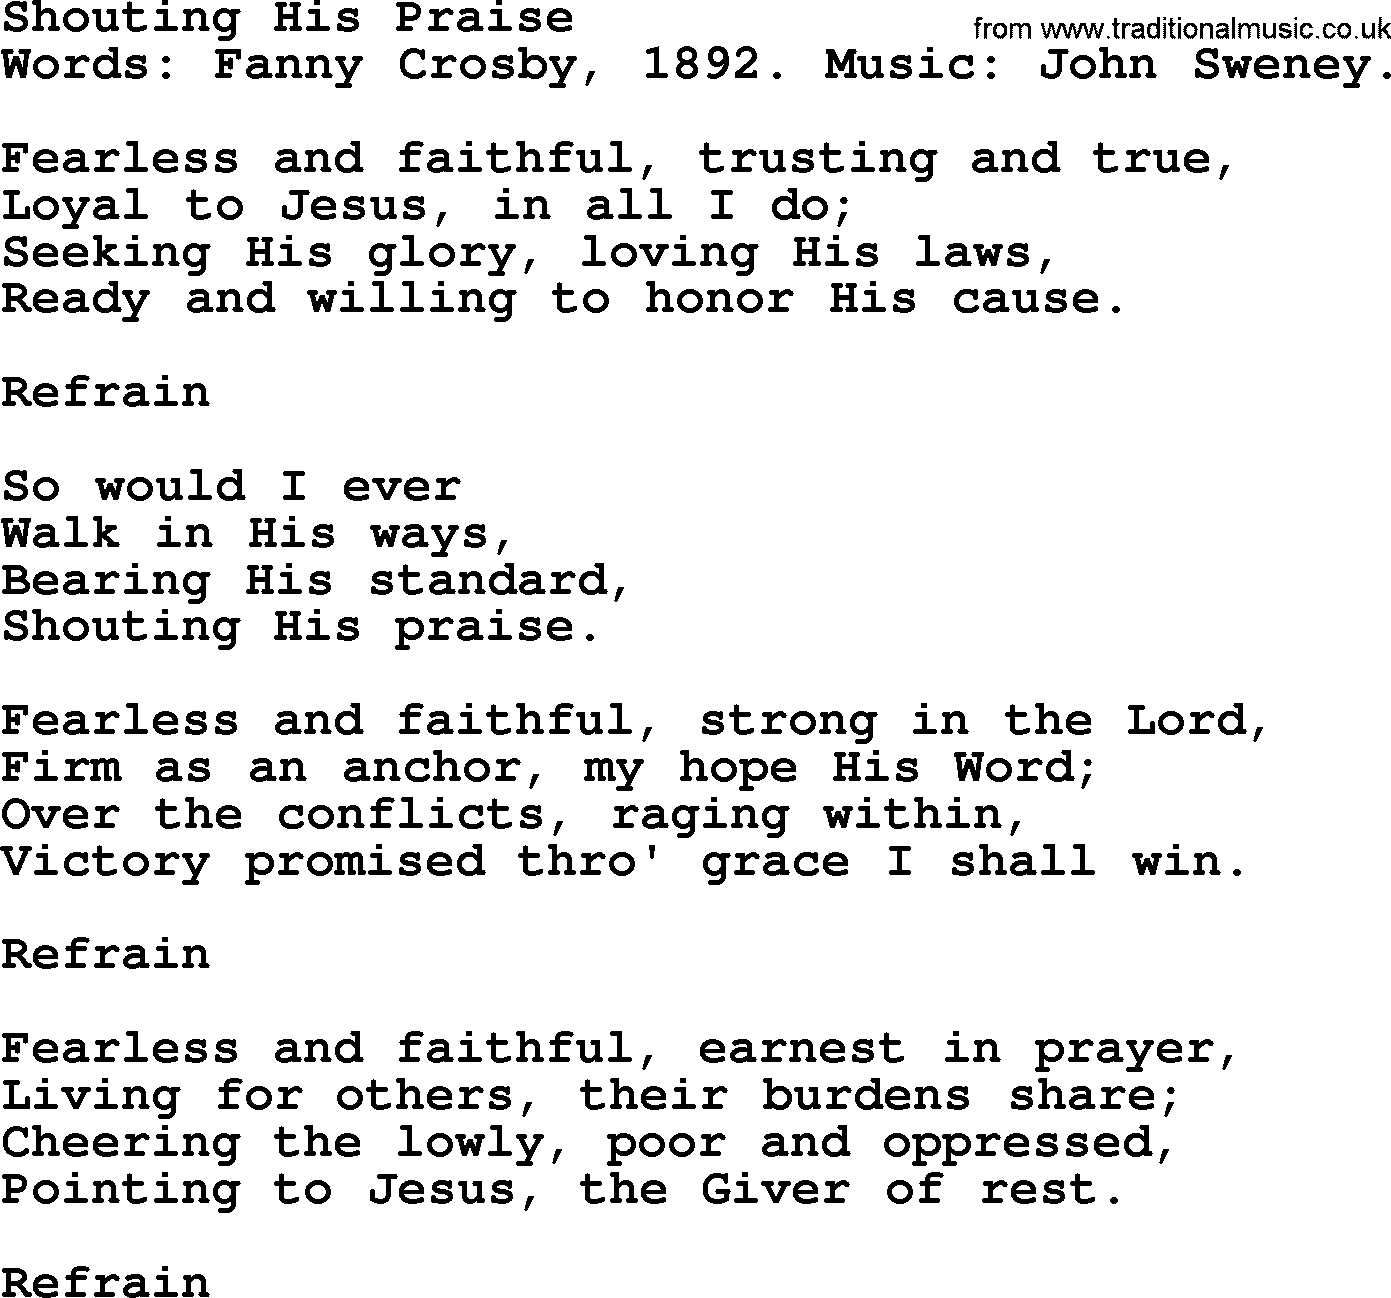 Fanny Crosby song: Shouting His Praise, lyrics